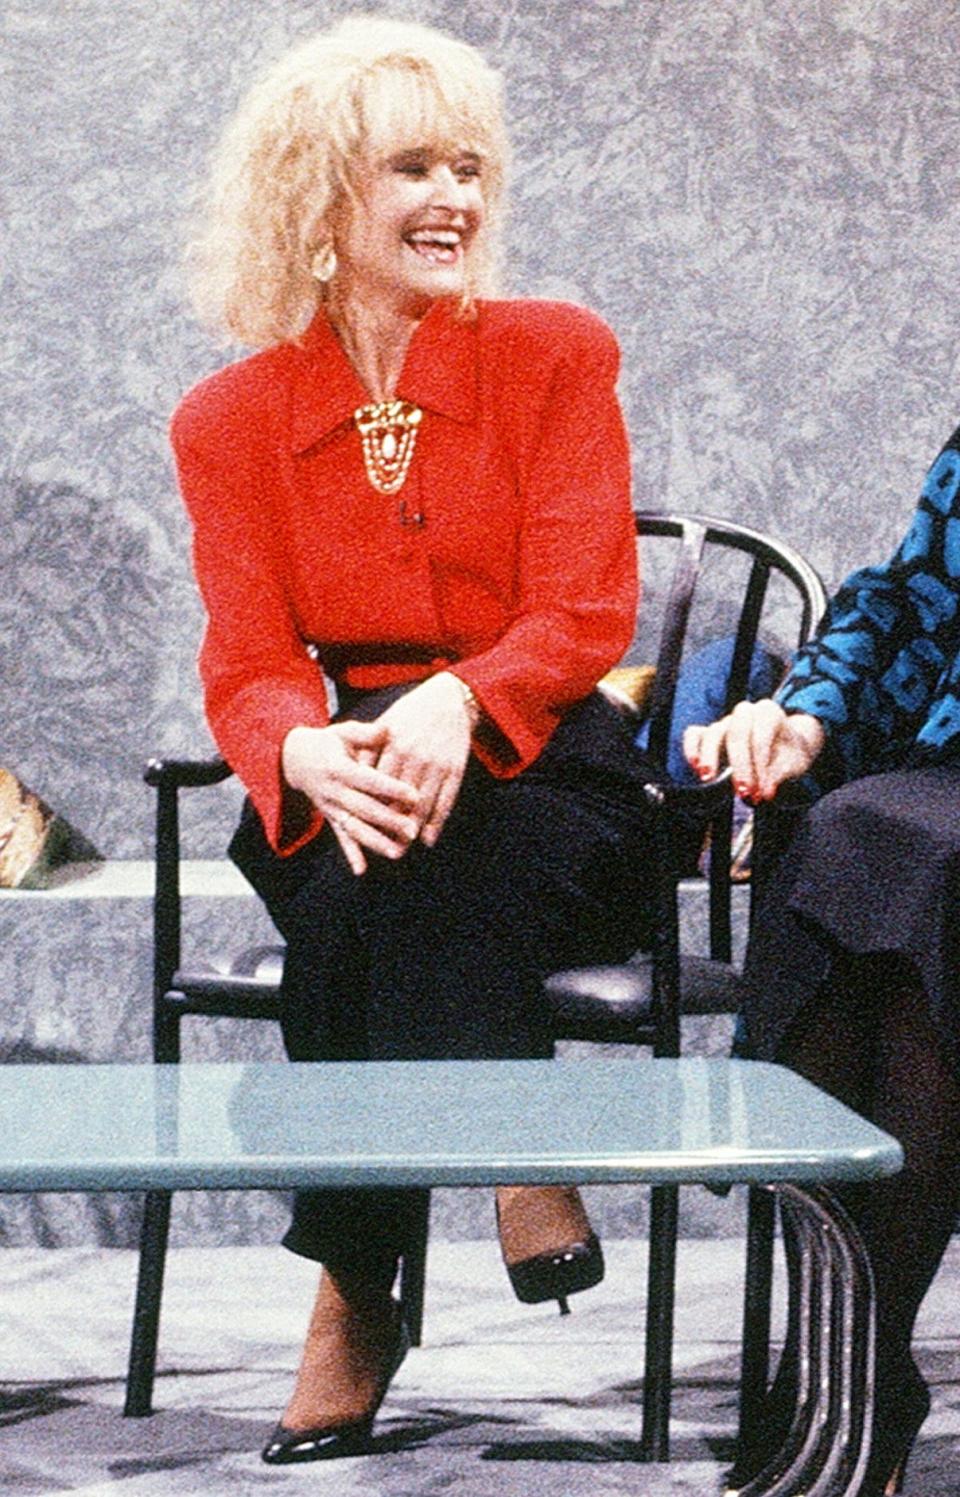 Jan Hooks as Dee Kelly and Nora Dunn as Linda Dano during "Attitudes" skit on November 18, 1989